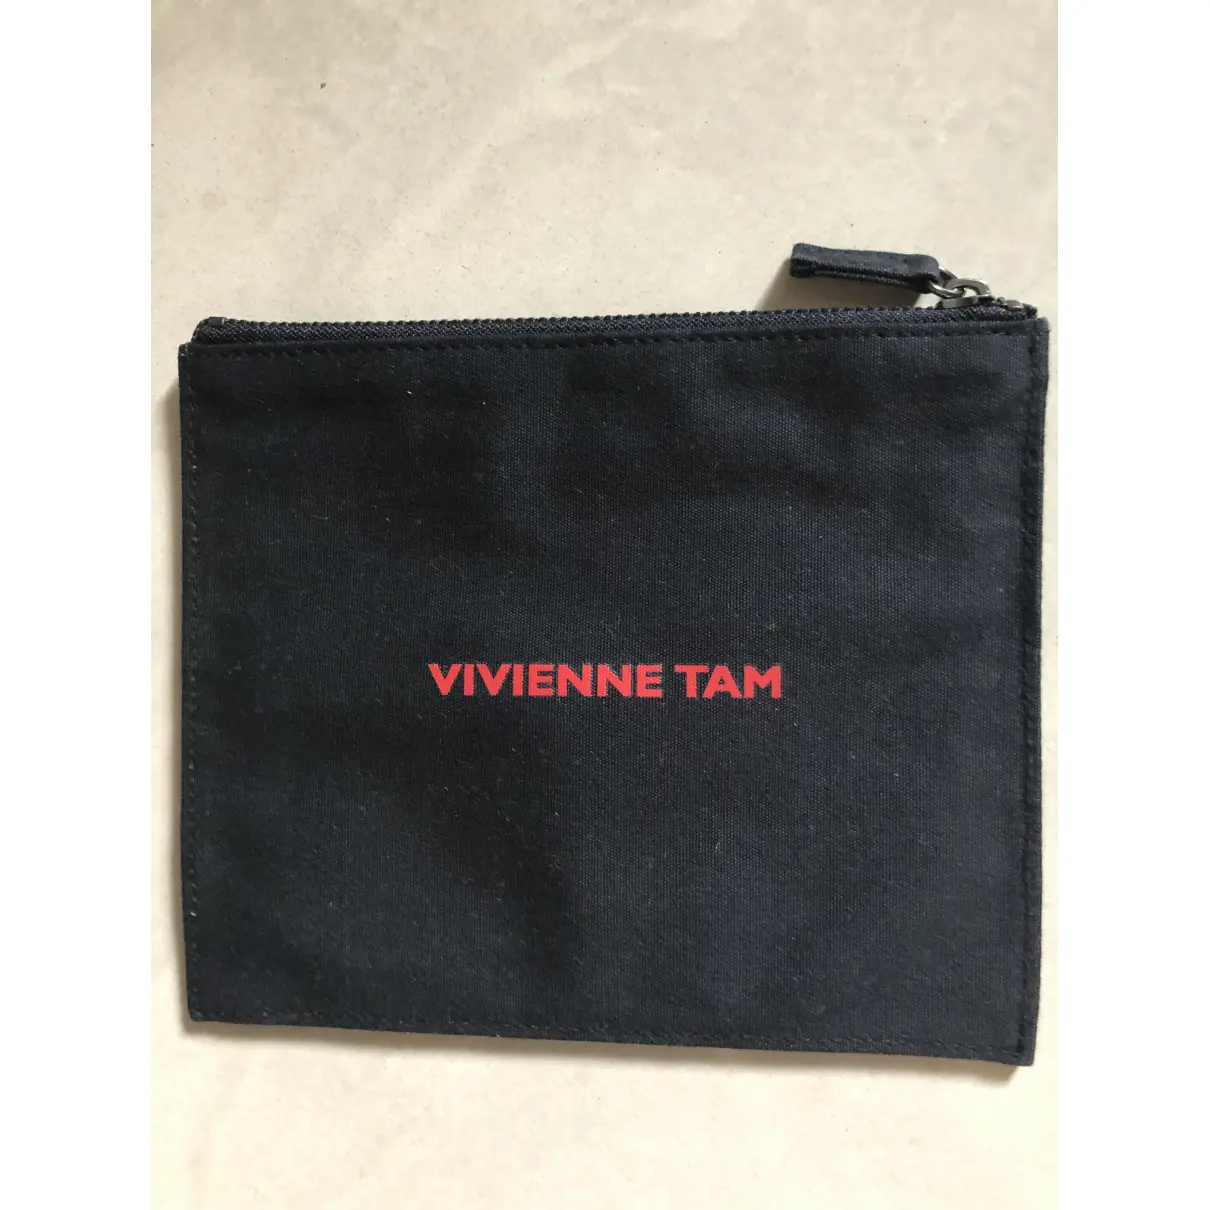 Buy Vivienne Tam Clutch online